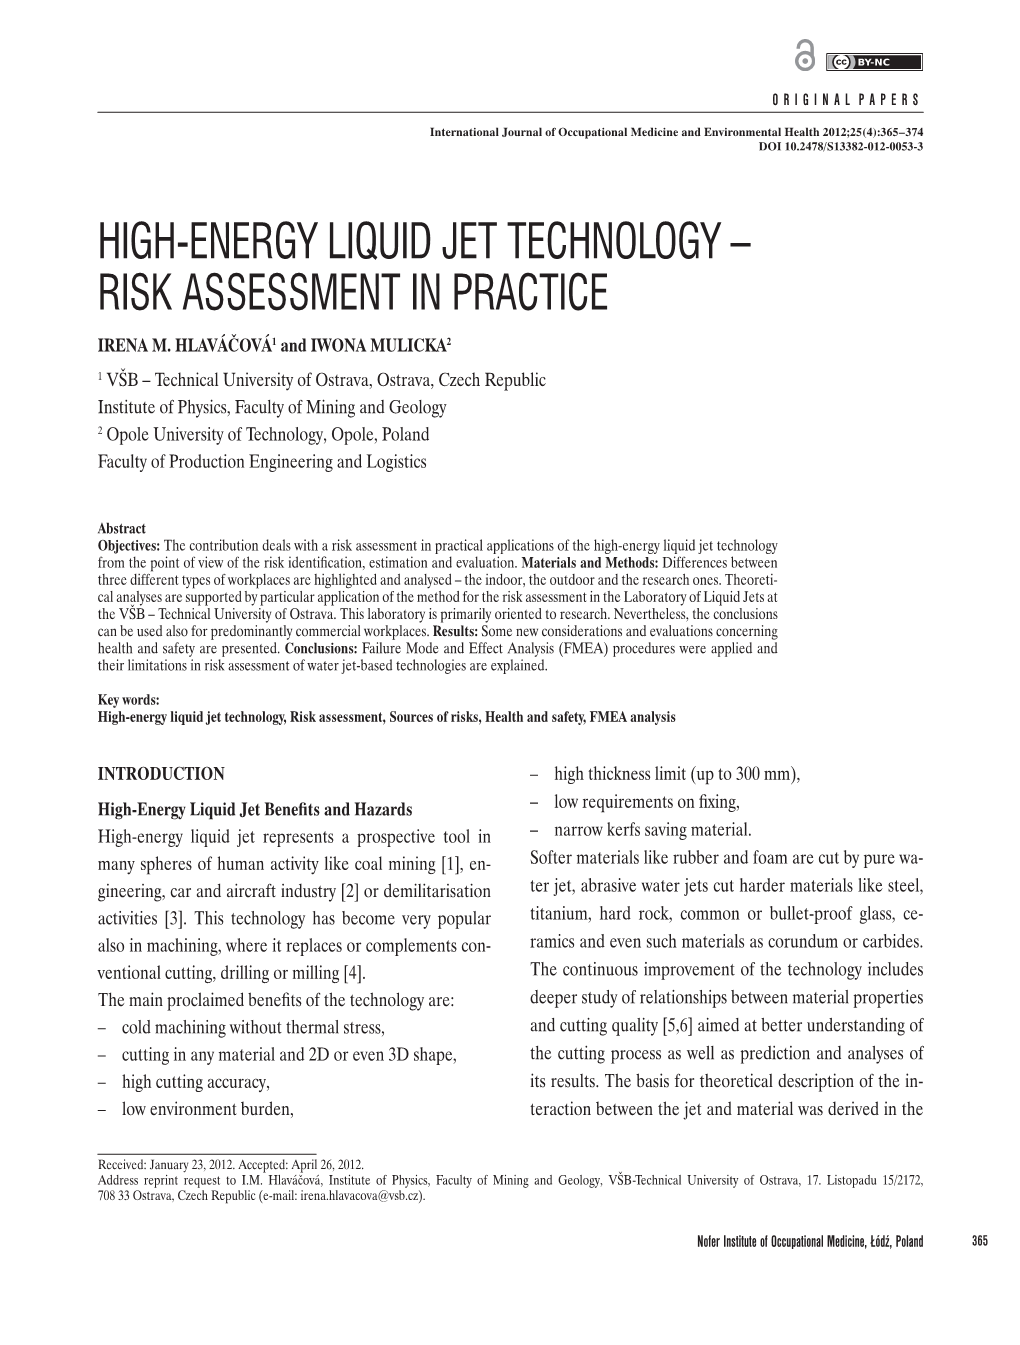 High-Energy Liquid Jet Technology – Risk Assessment in Practice Irena M